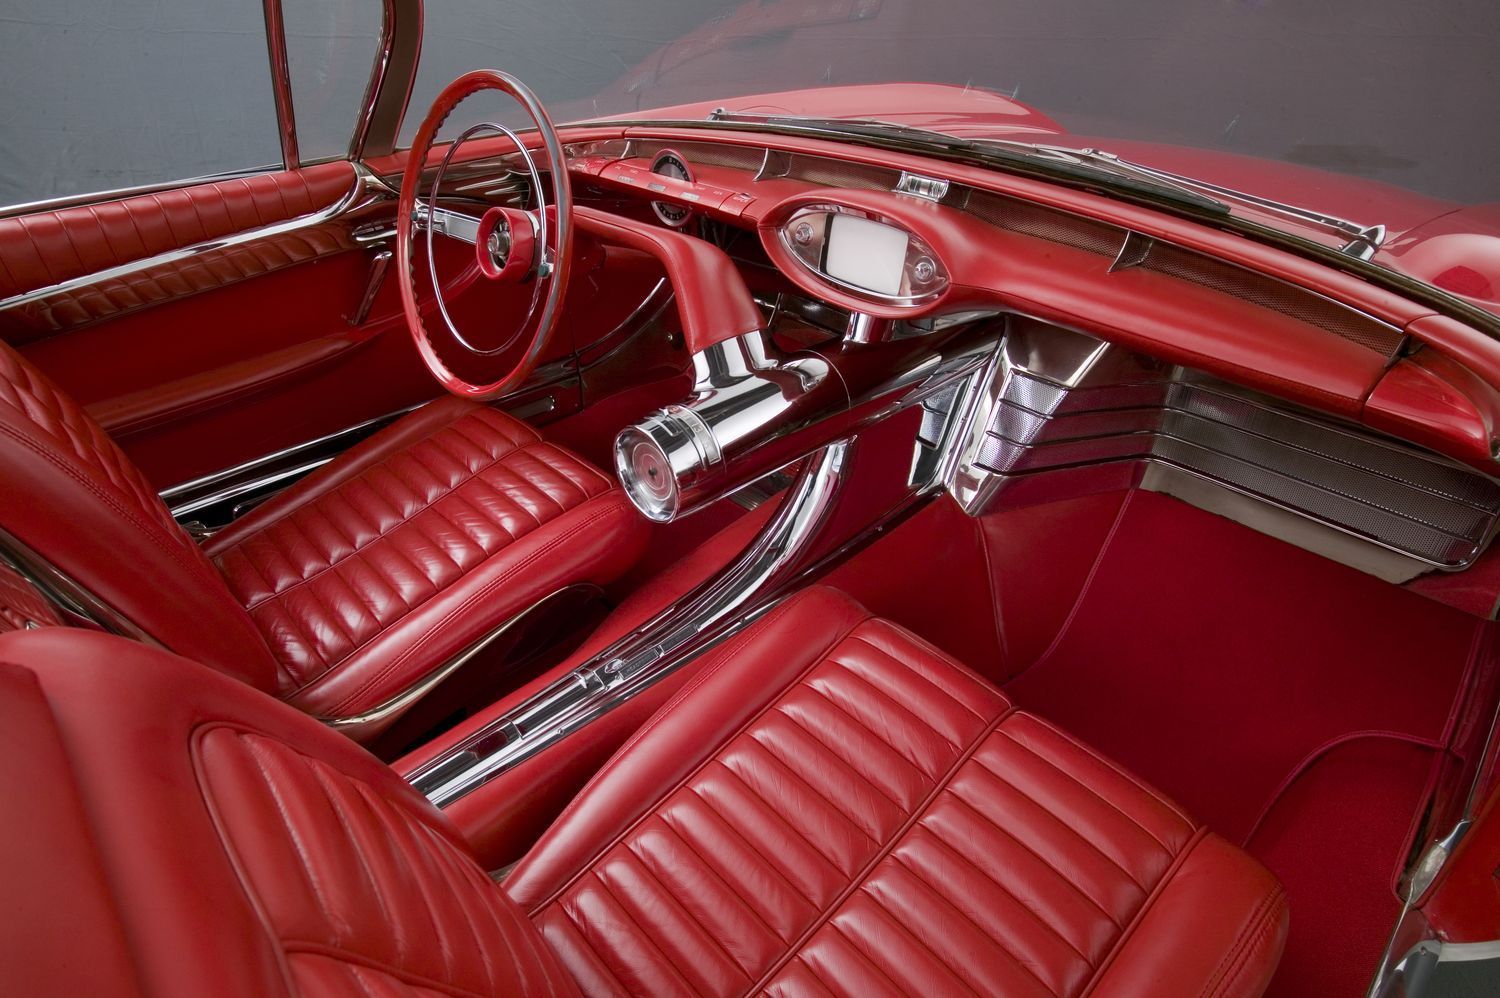 1956 Buick Centurion Concept Car interior shot